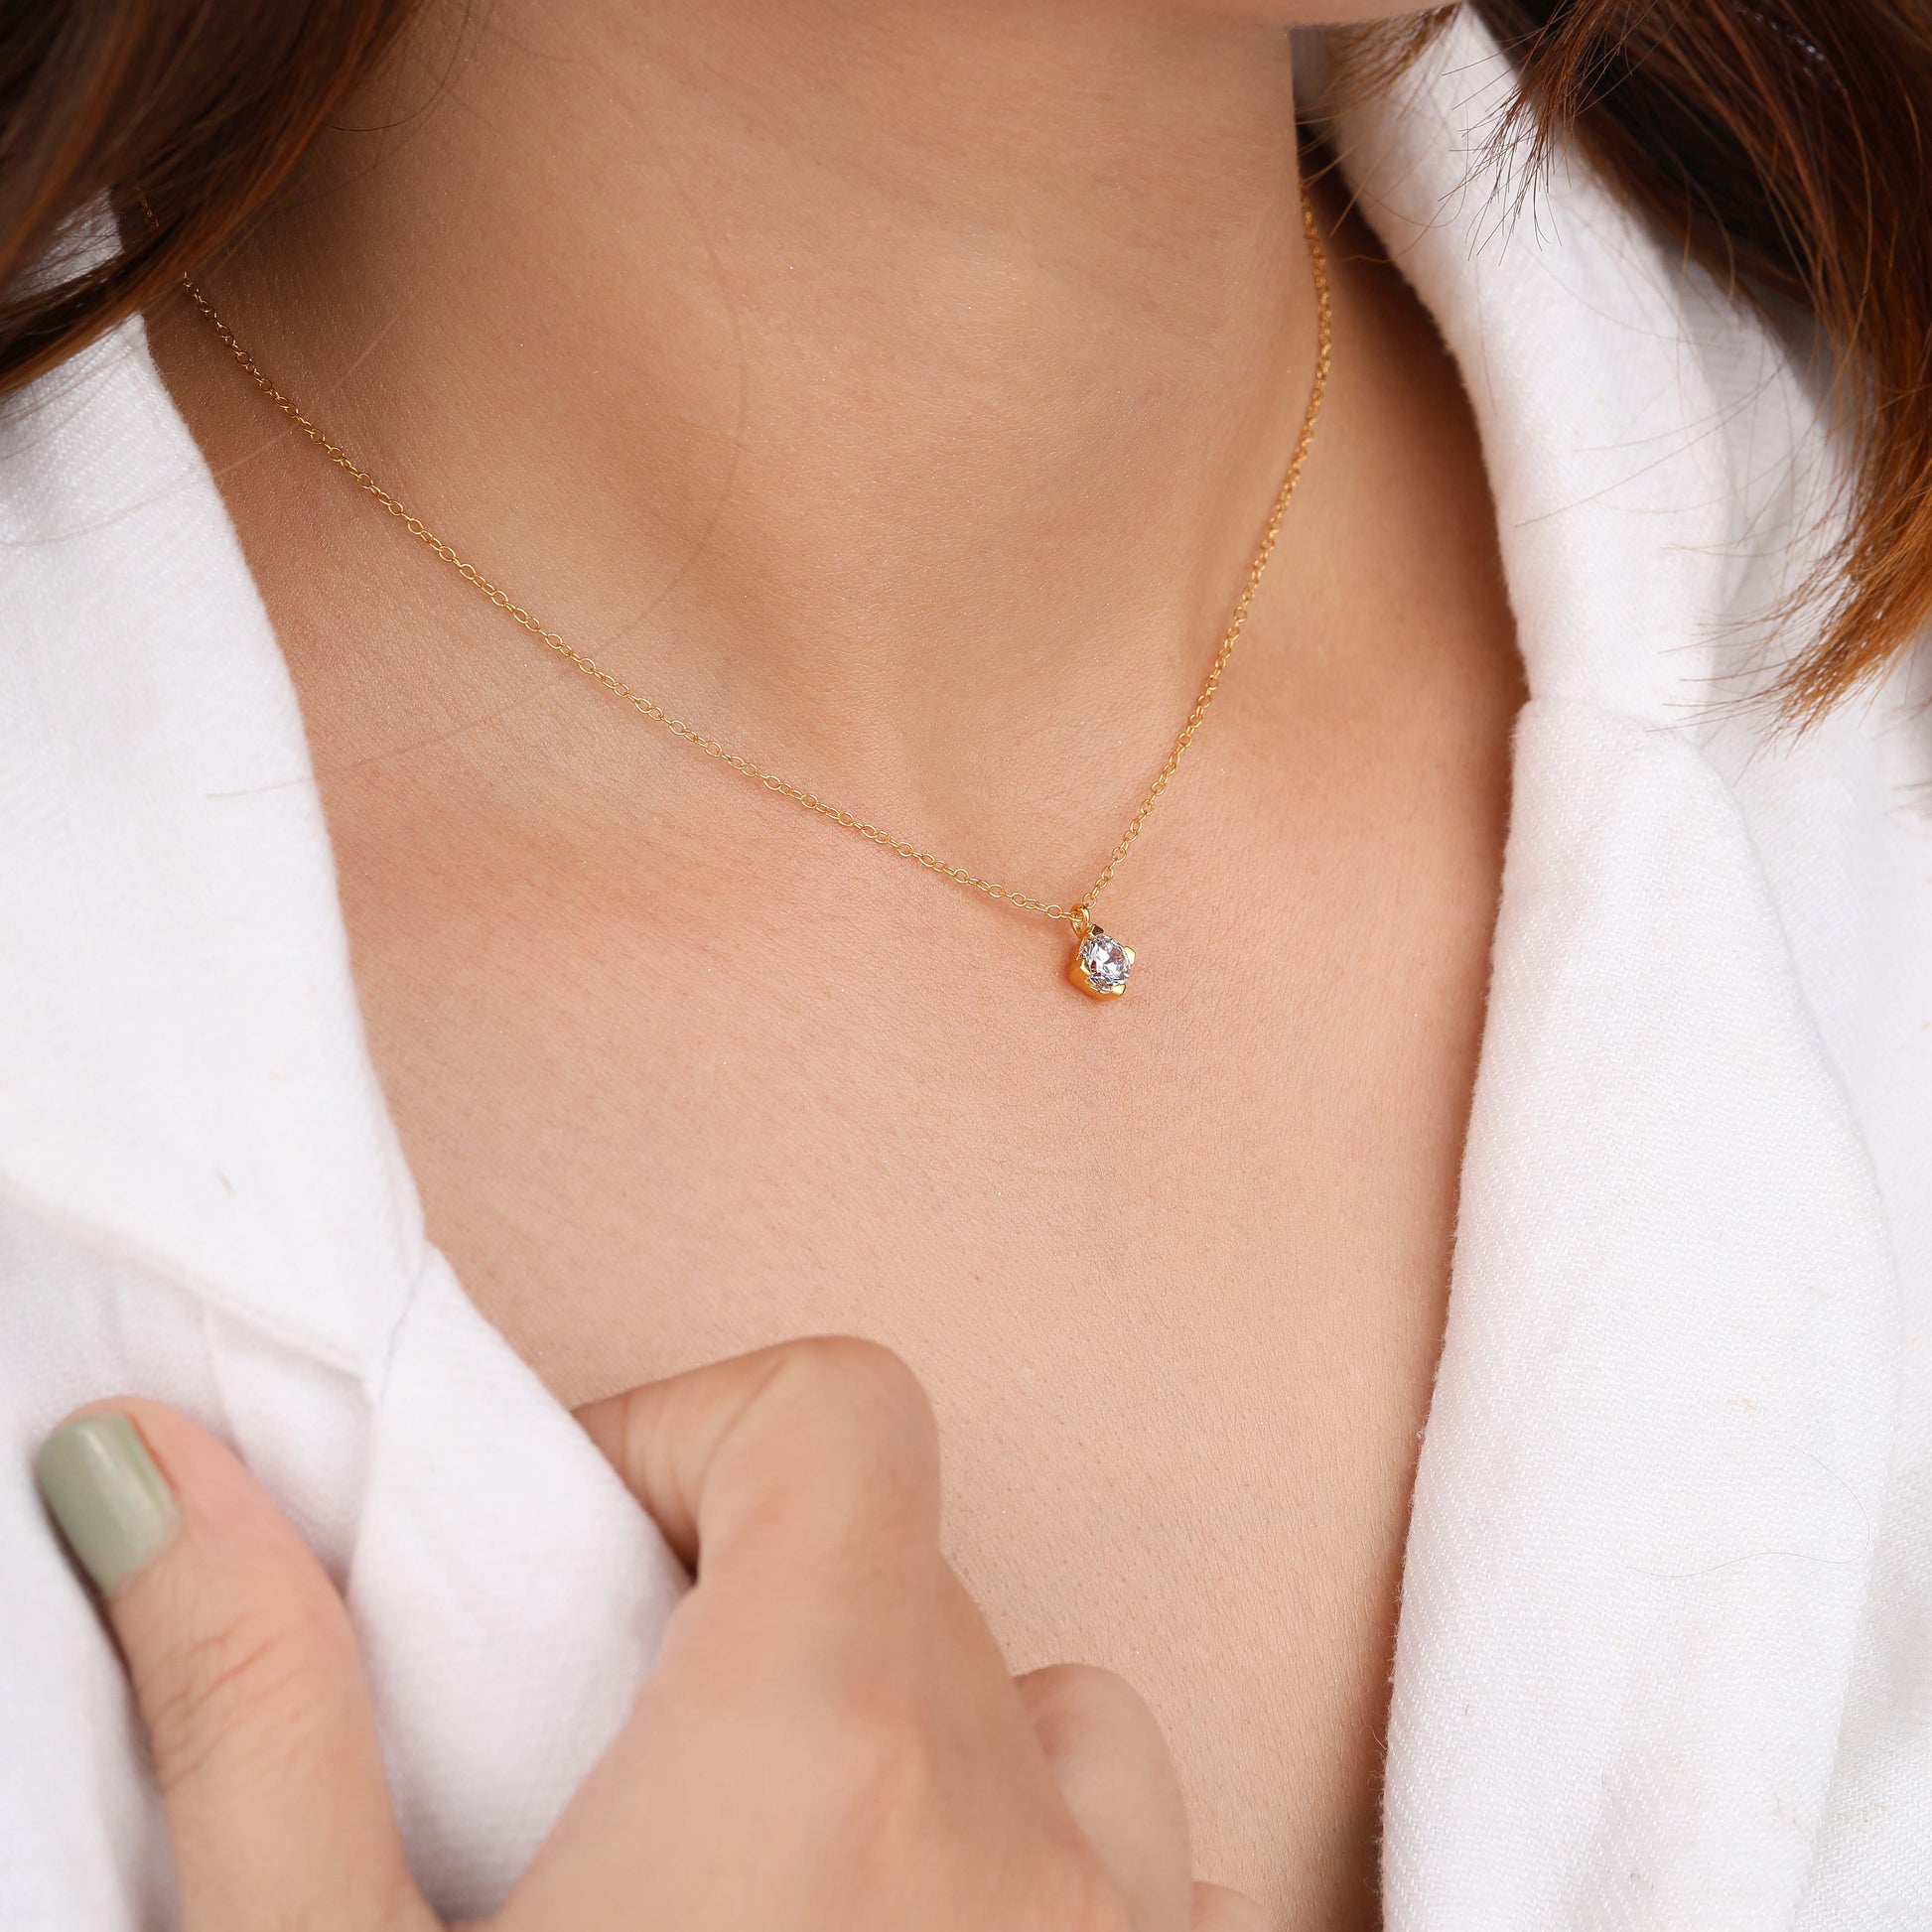 Necklace with Diamond Pendant"